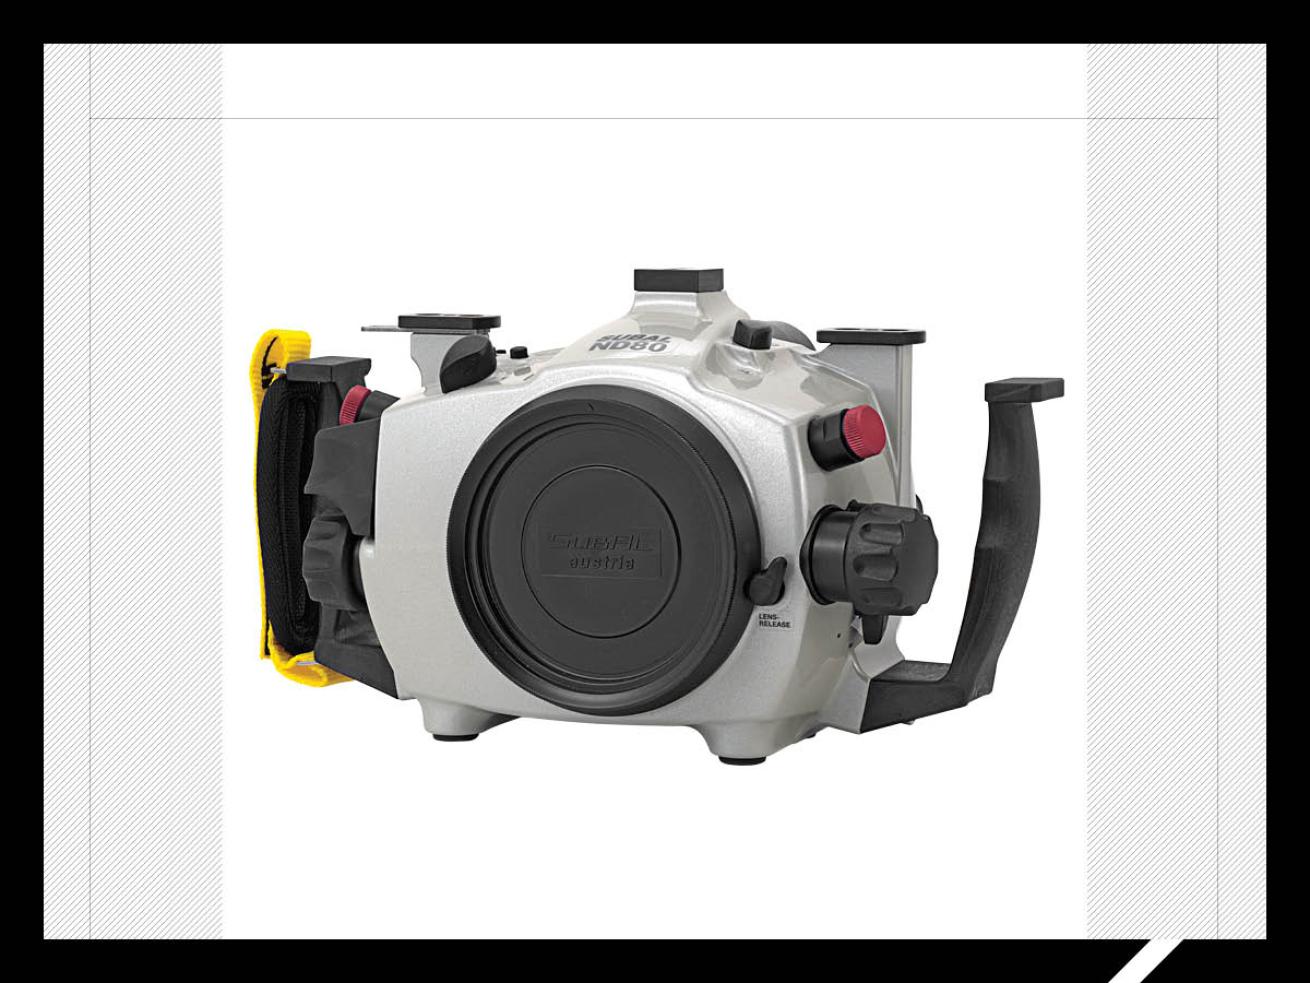 Nikon D810 camera and underwater housing.